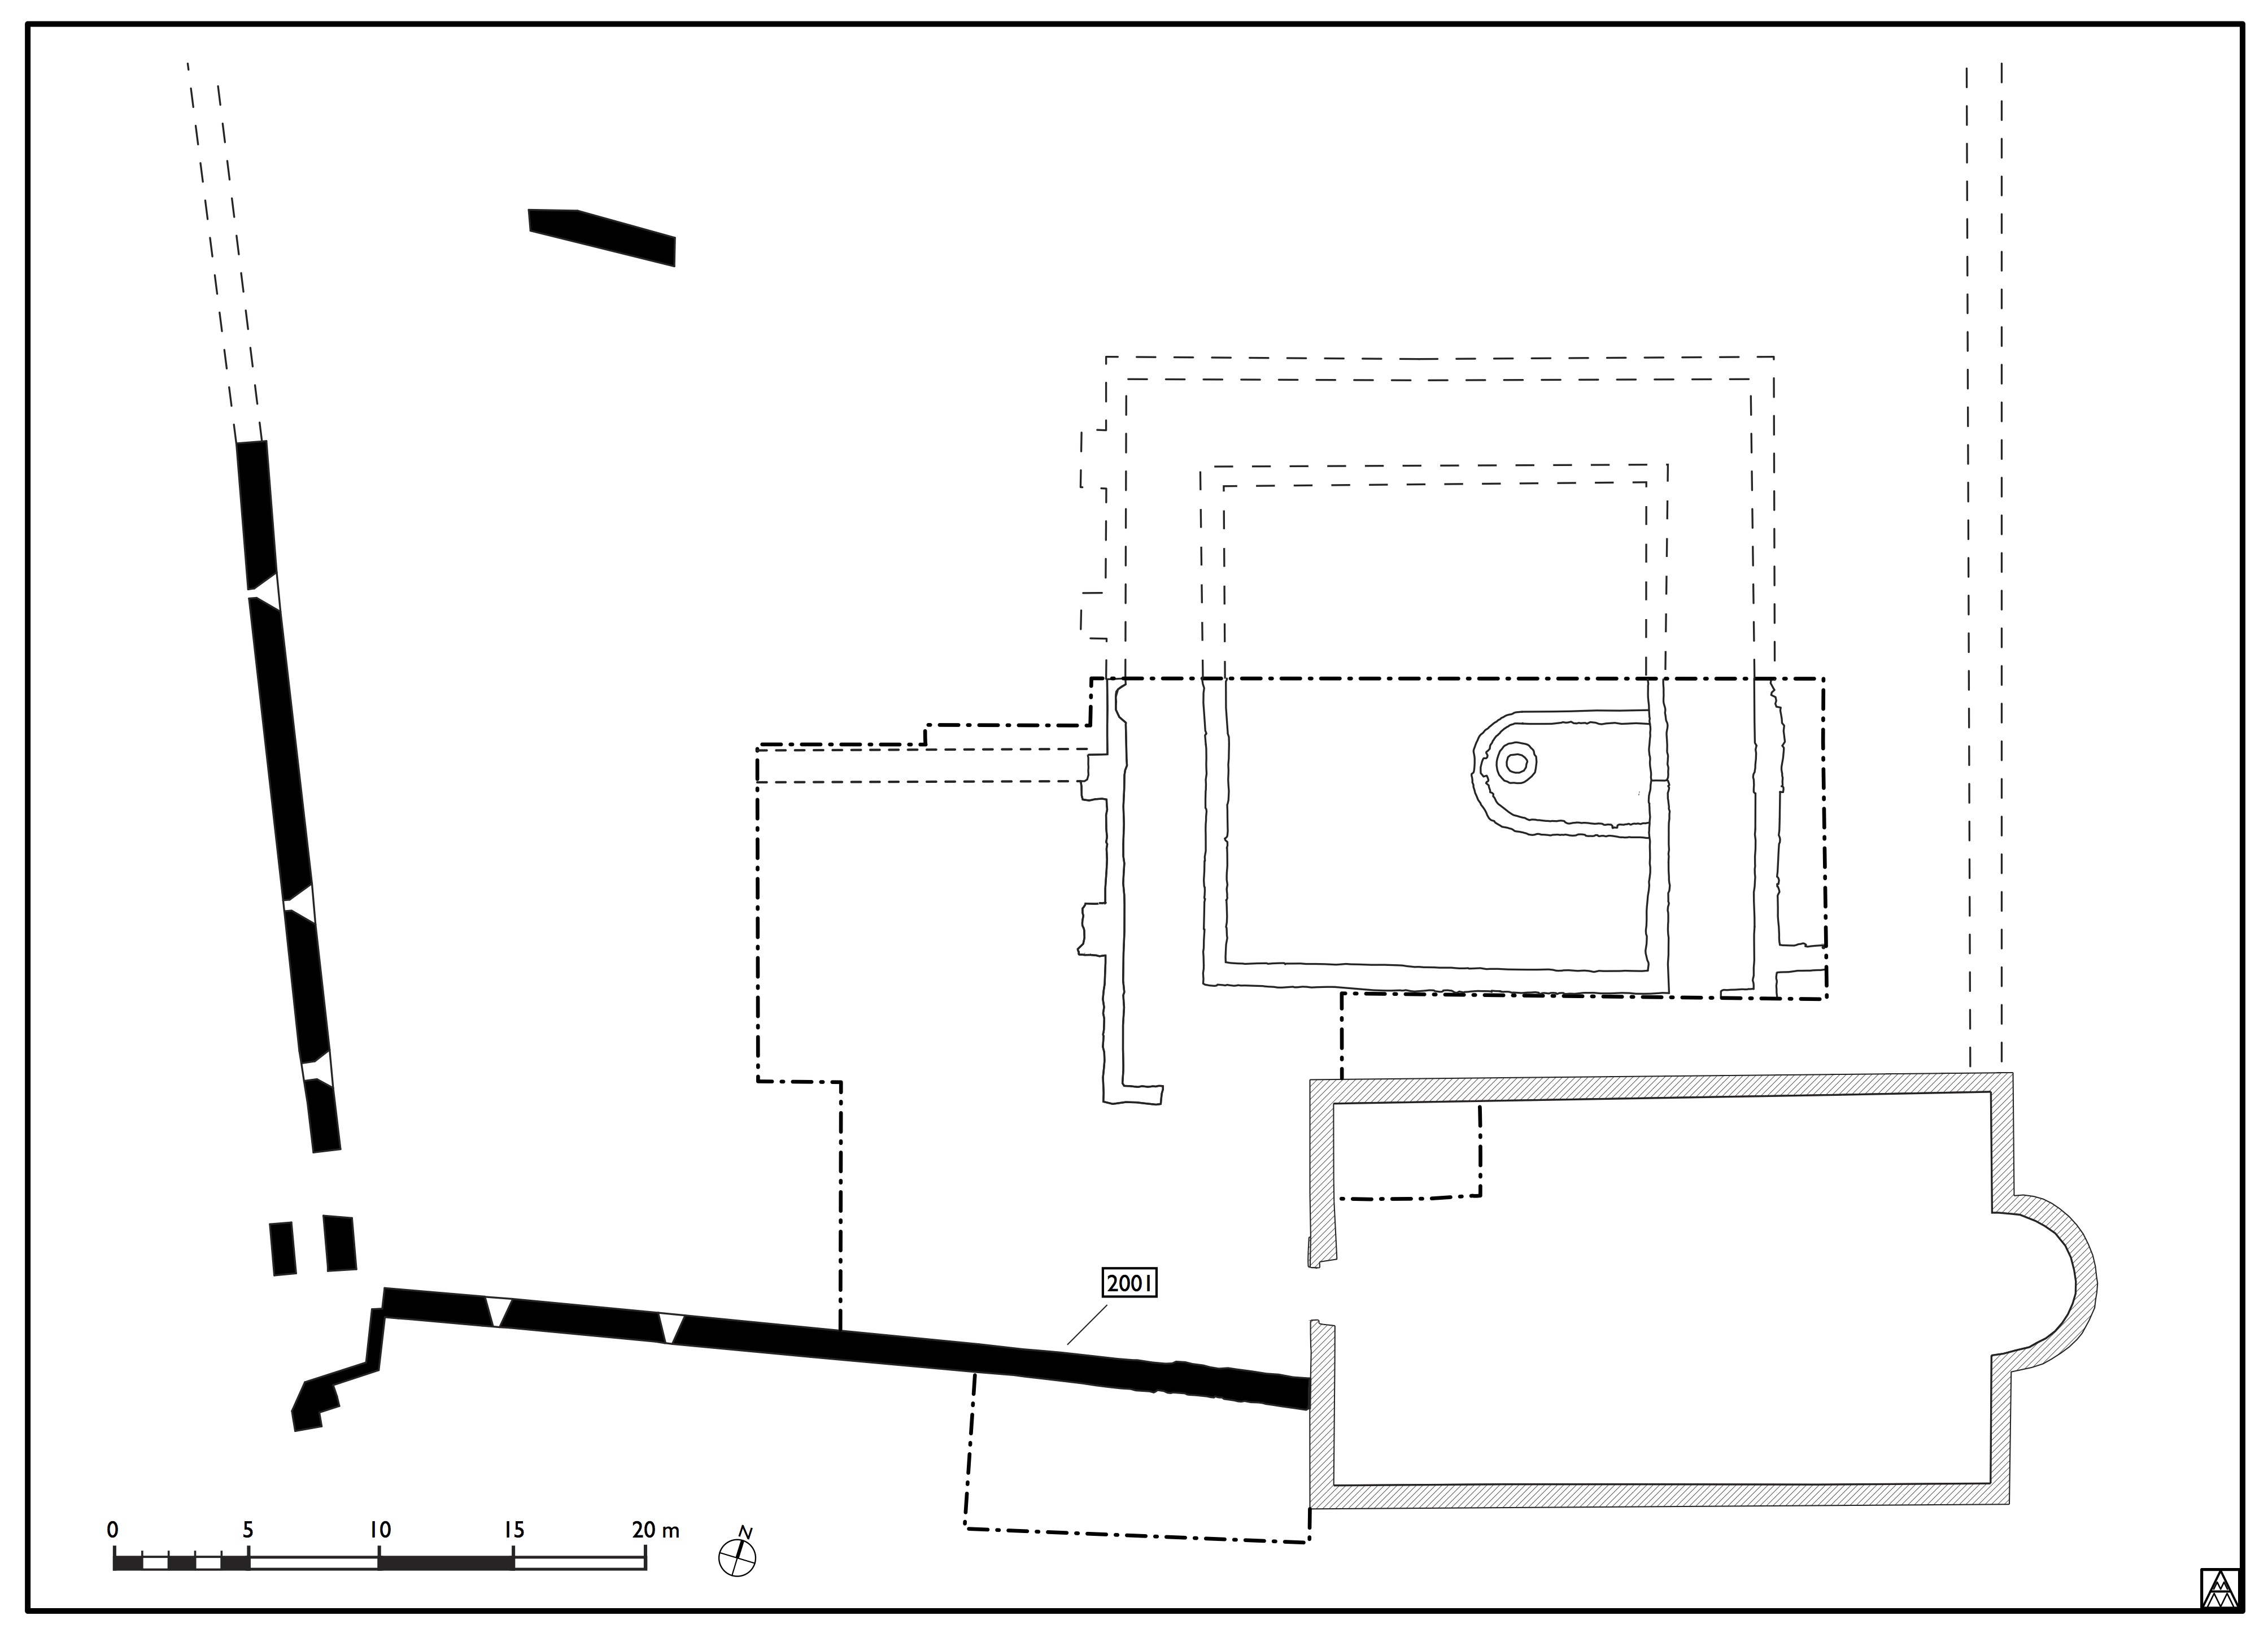 Figure 43. Plan of the castrum (Margaret Andrews).